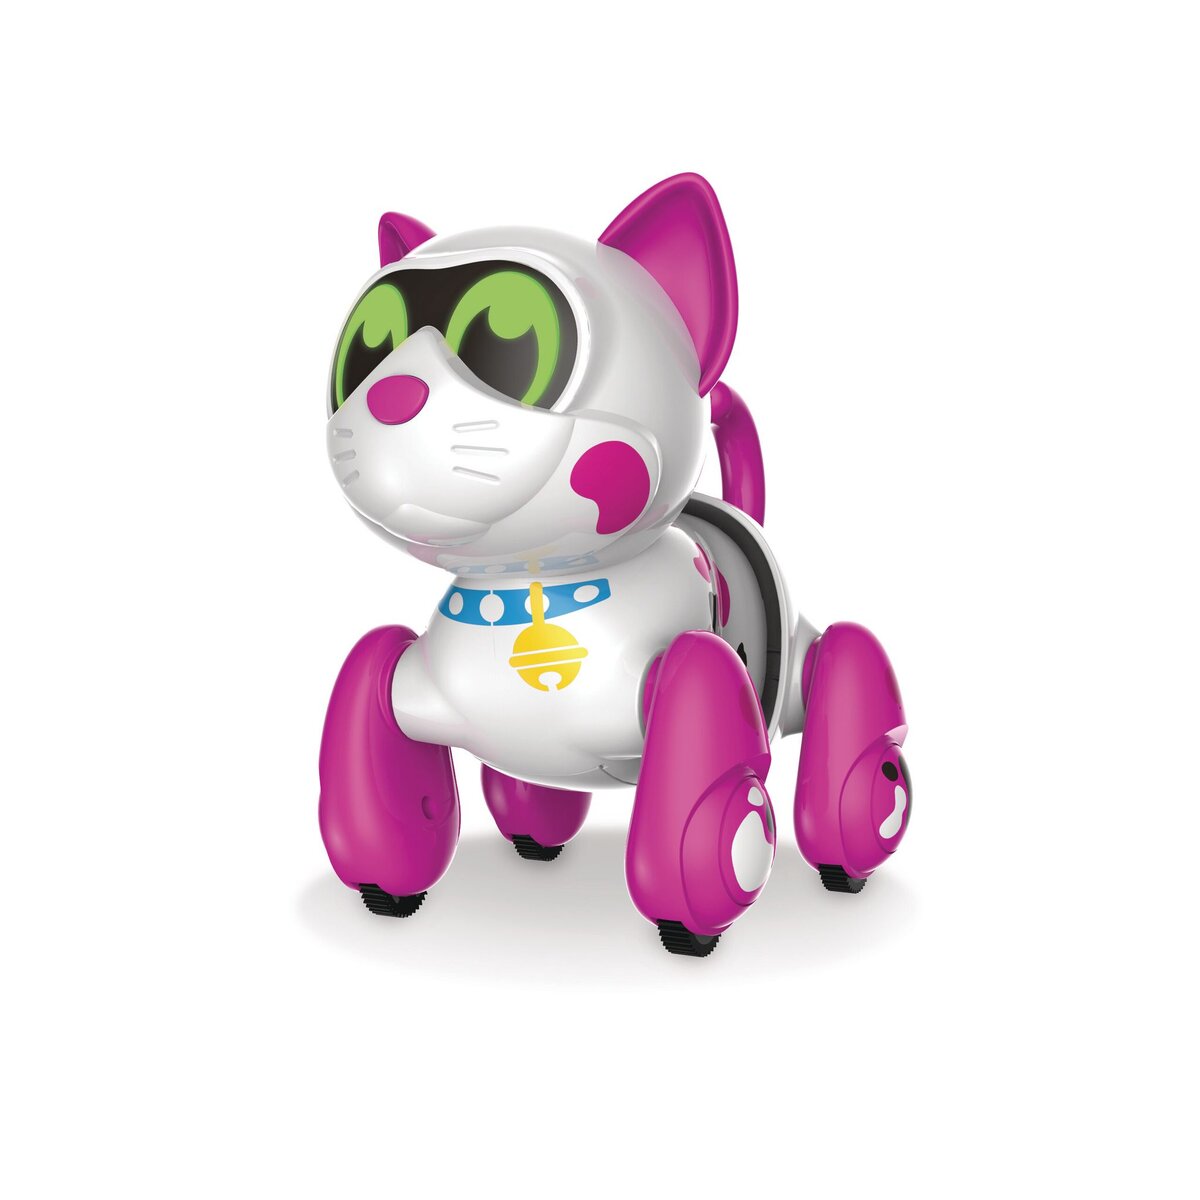 SILVERLIT Robot interactif Mooko mini puppy